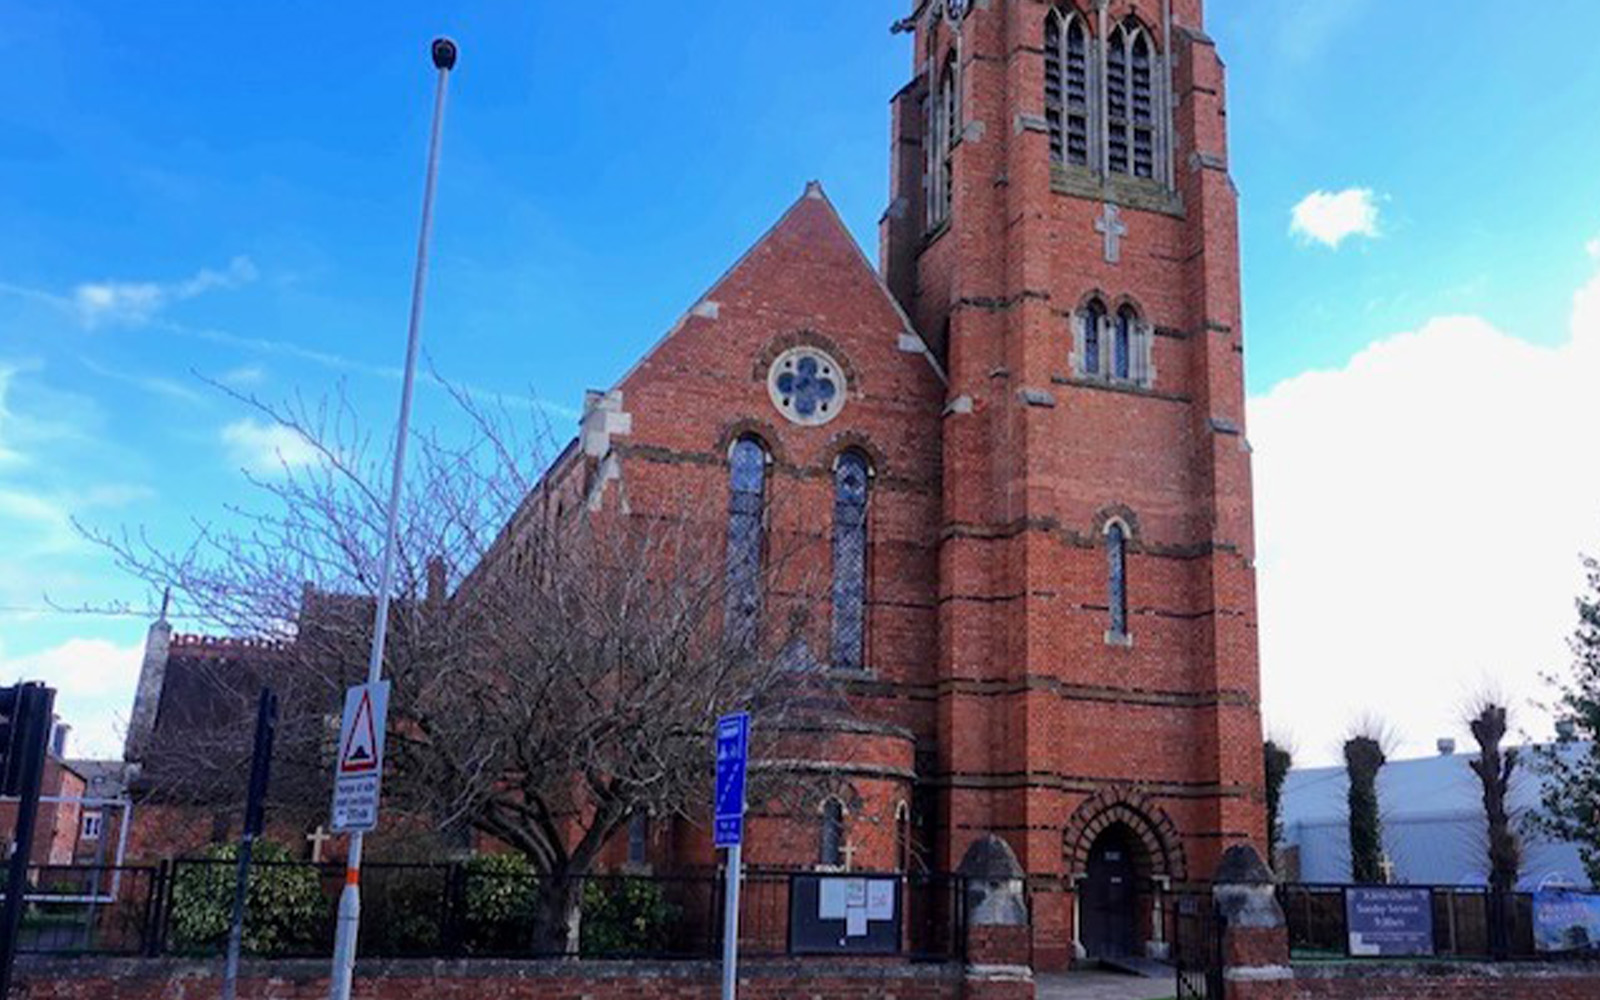 St James Church, Northampton